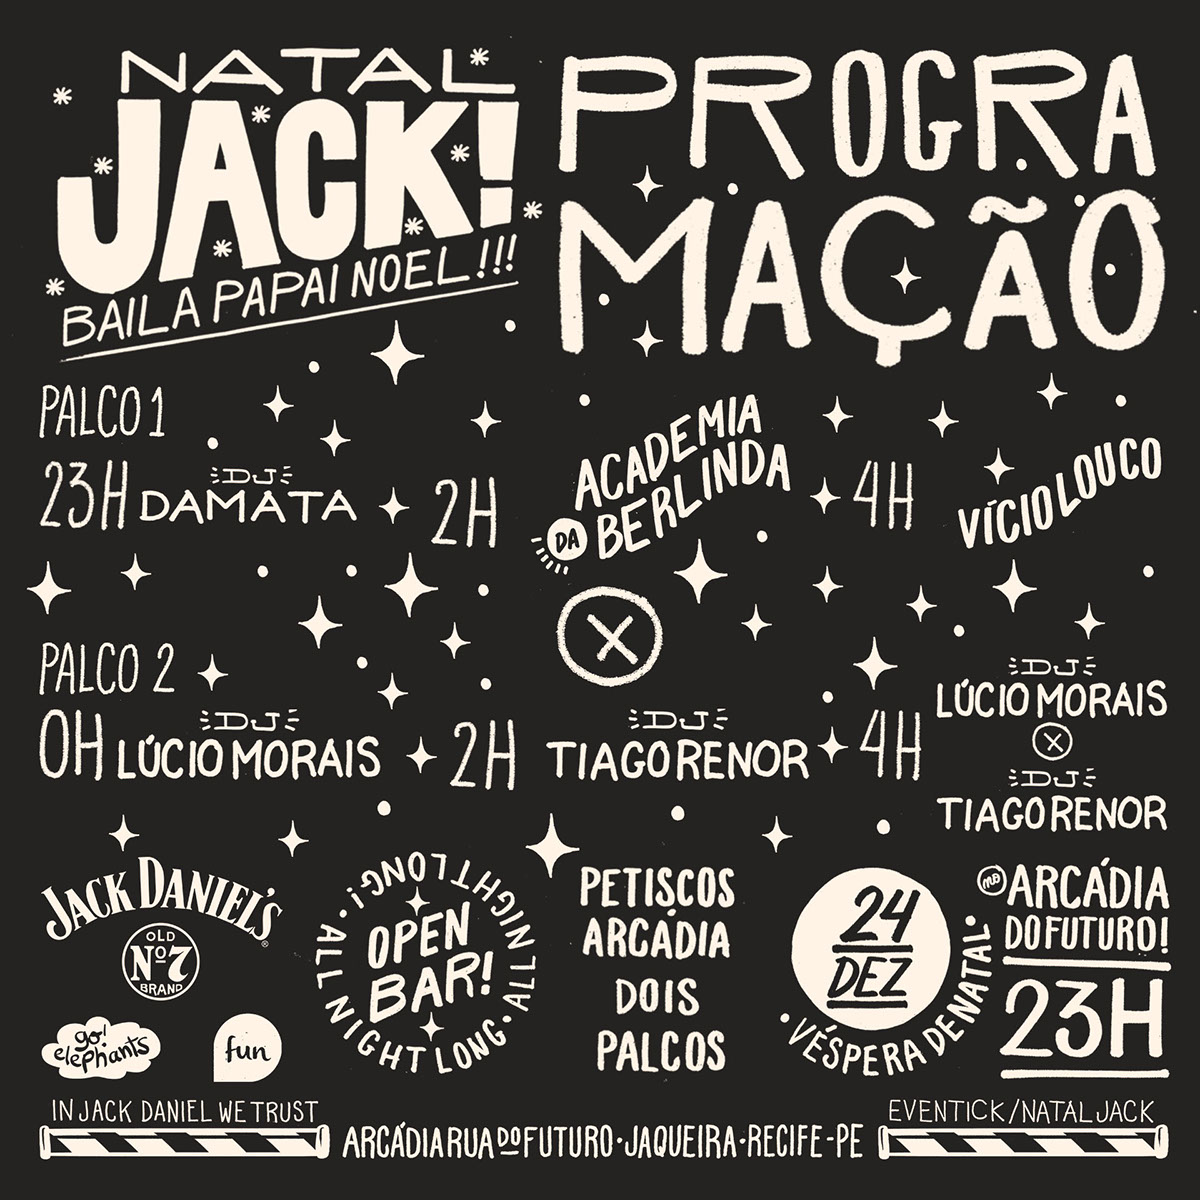 recife jack daniel's jack daniel art design poster cartaz Brasil festa party academia da berlinda vicio louco Caramurú baumgartner ilustrador